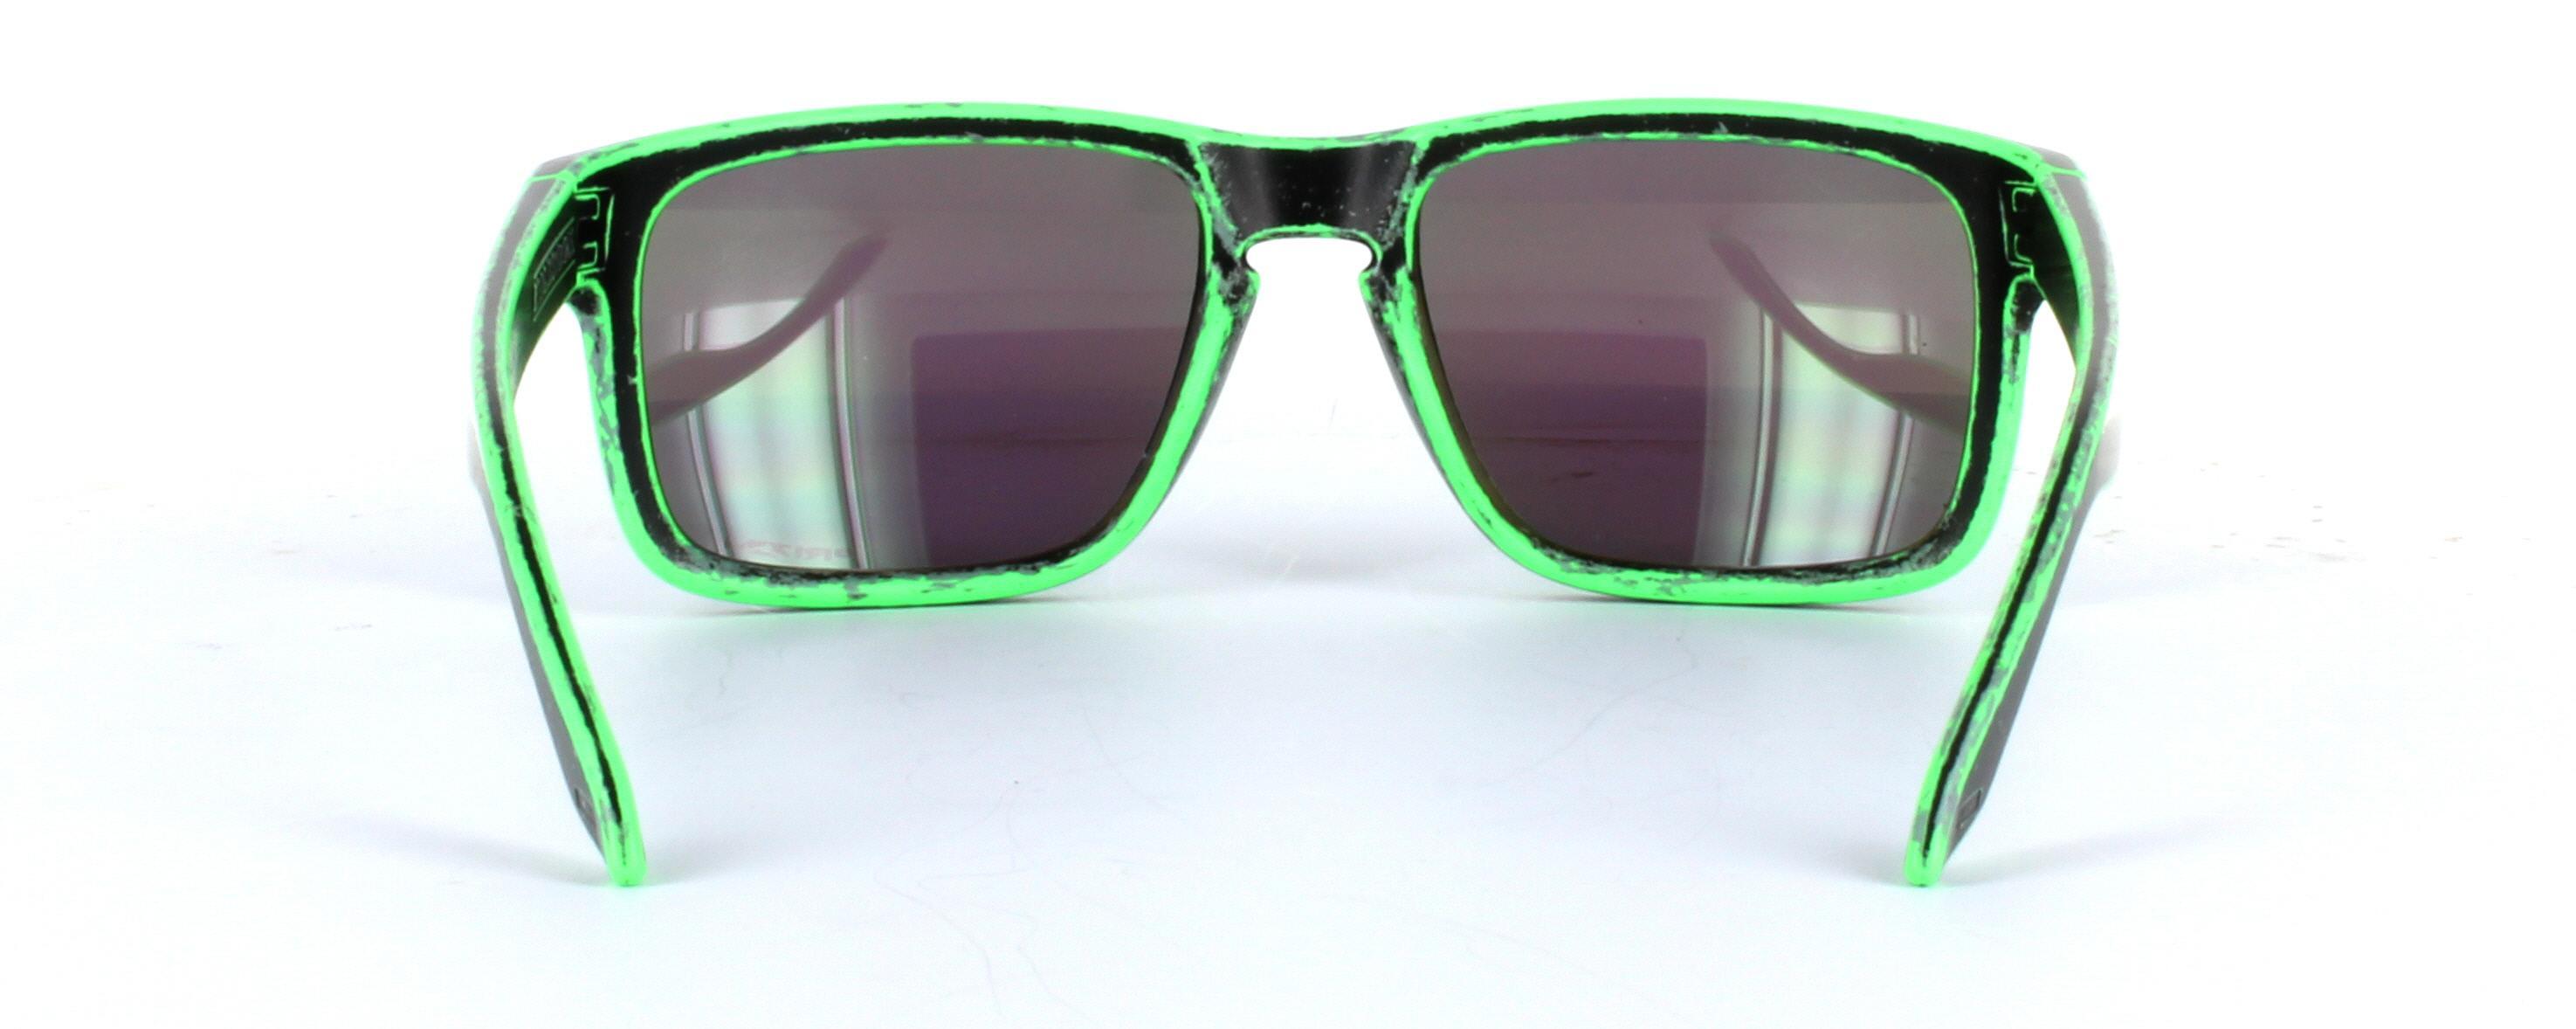 Oakley (9102) Black Full Rim Plastic Sunglasses - Image View 3